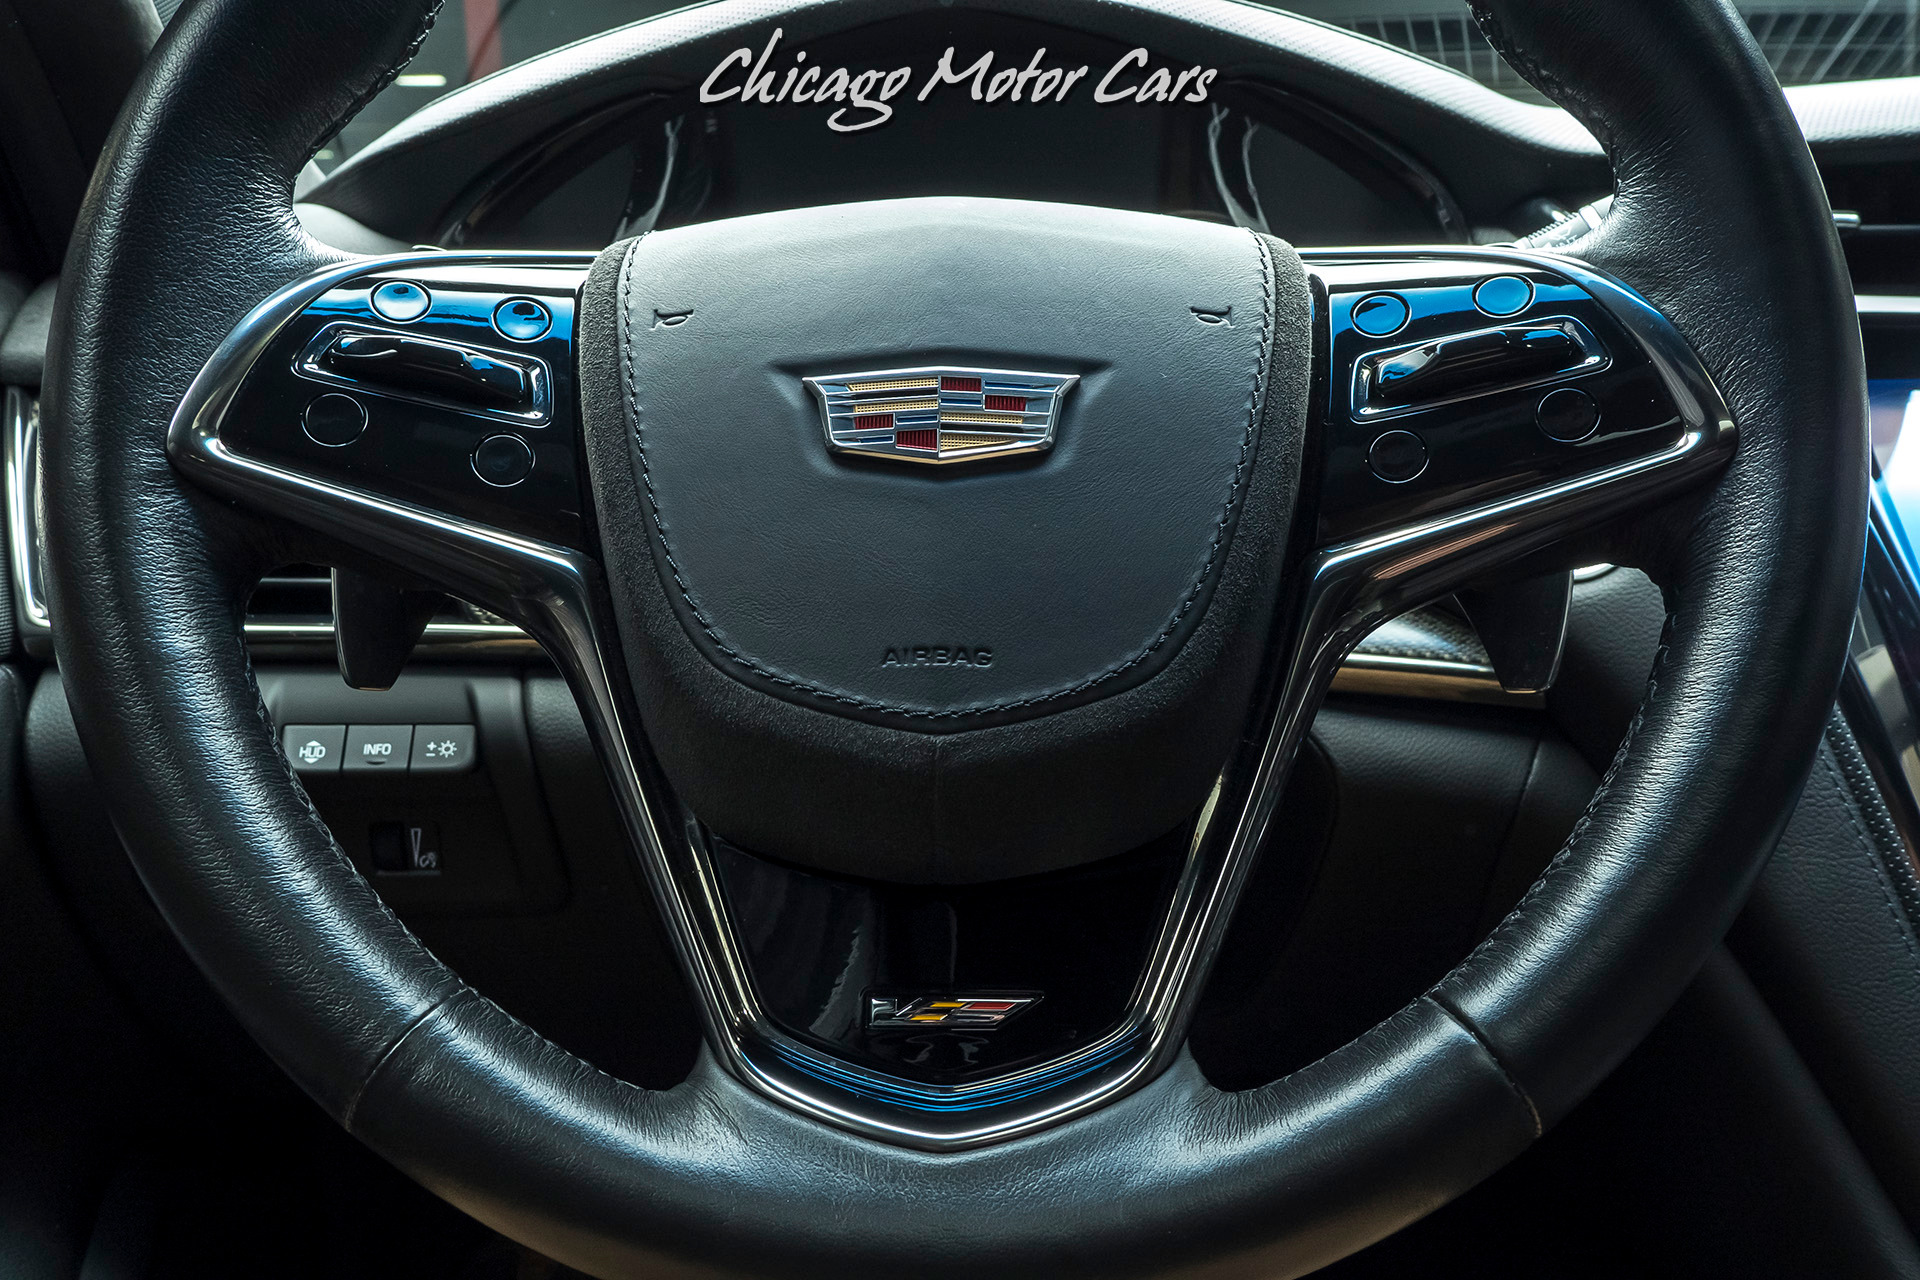 Used-2016-Cadillac-CTS-V-Sedan-MSRP-89K-LUXURY-PACKAGE-ULTRAVIEW-SUNROOF